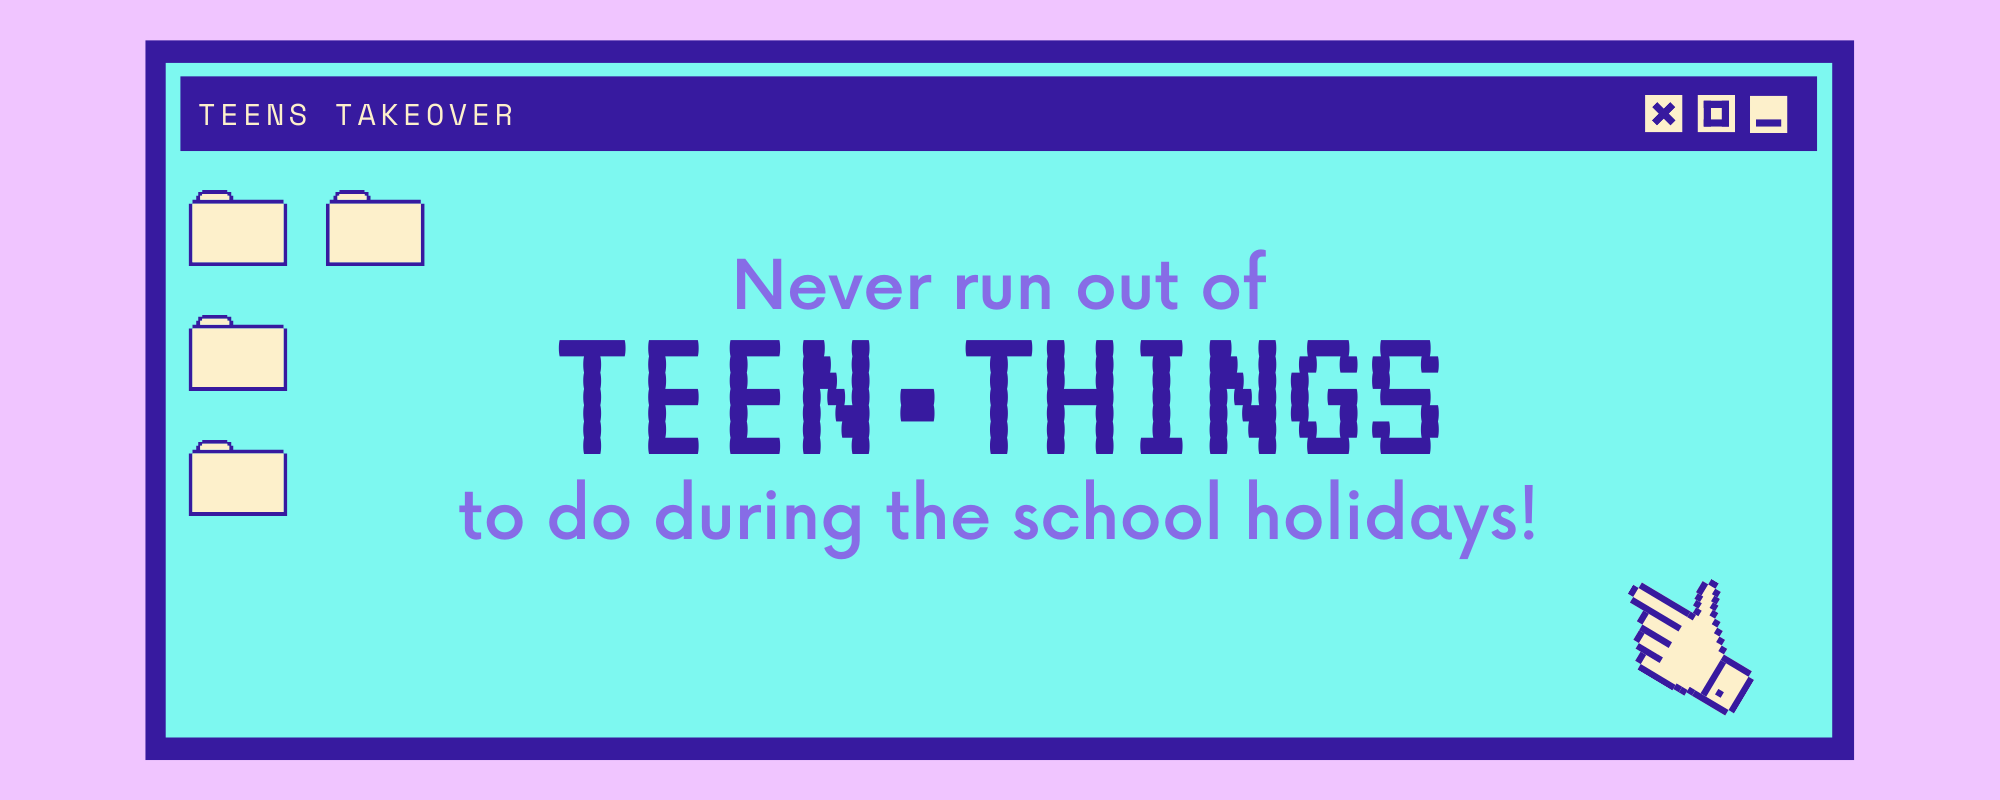 Teen things logo